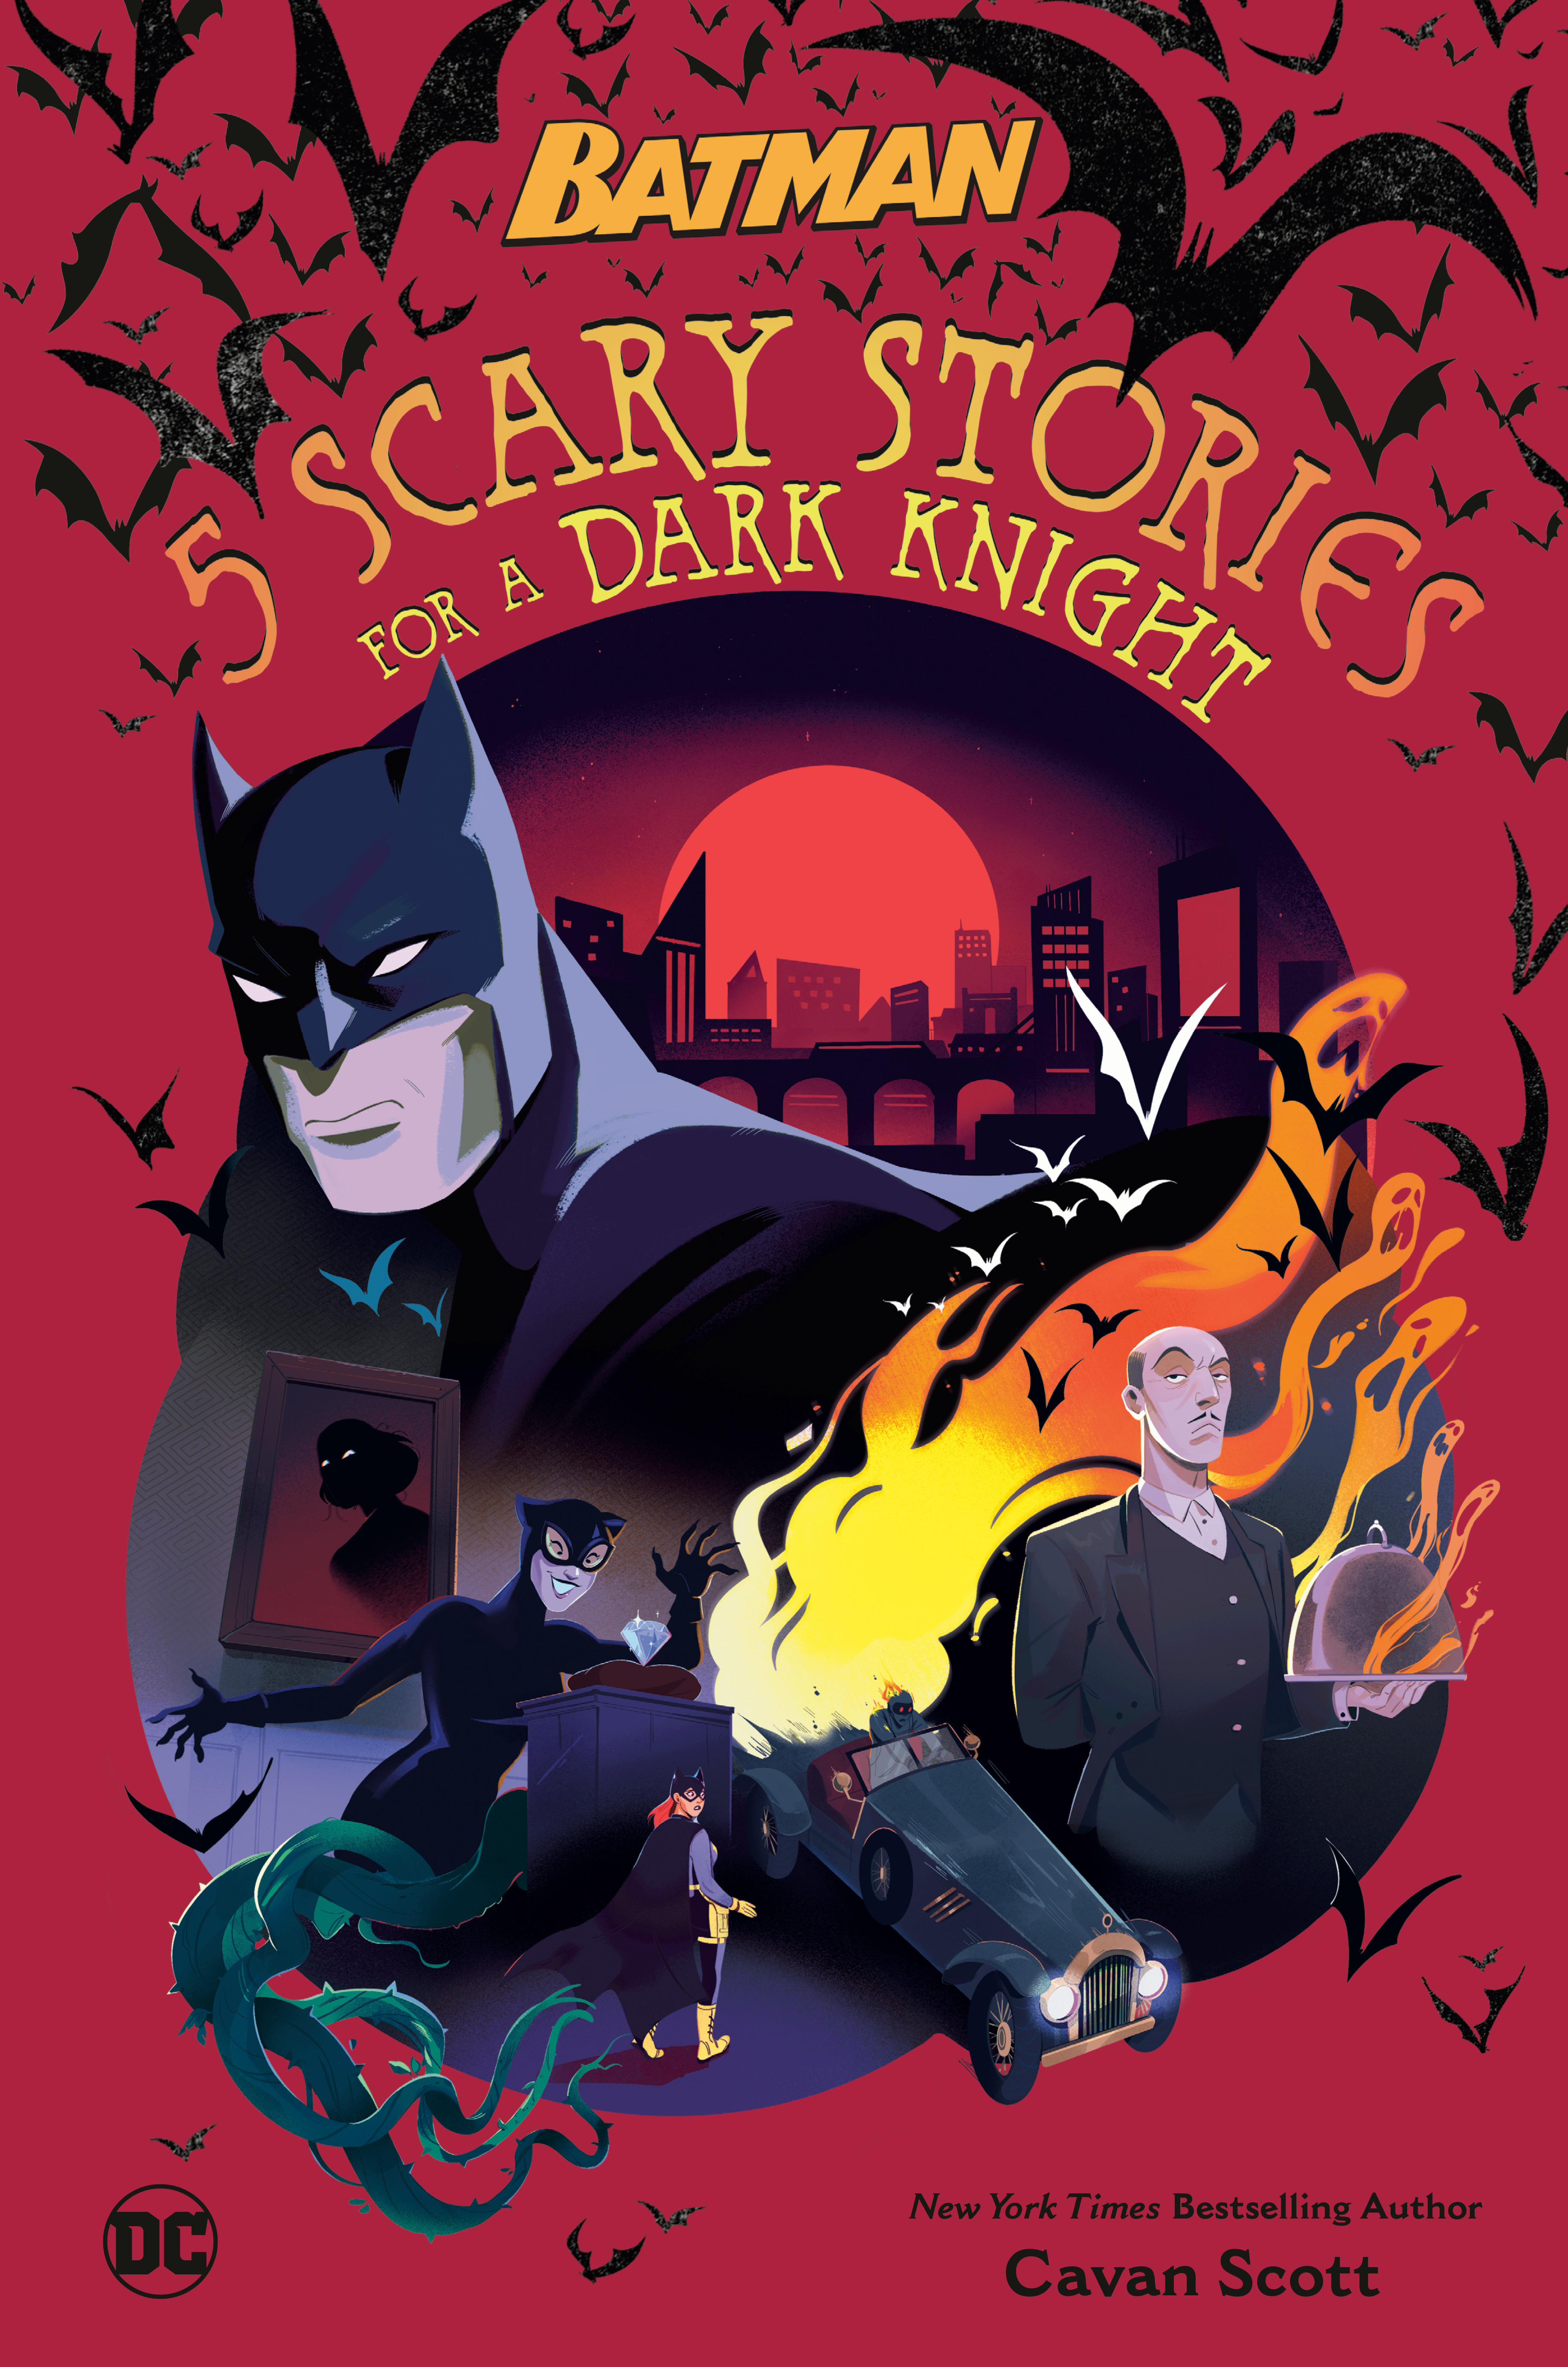 5 Scary Stories for a Dark Knight #1 (DC Batman) | Scott, Cavan